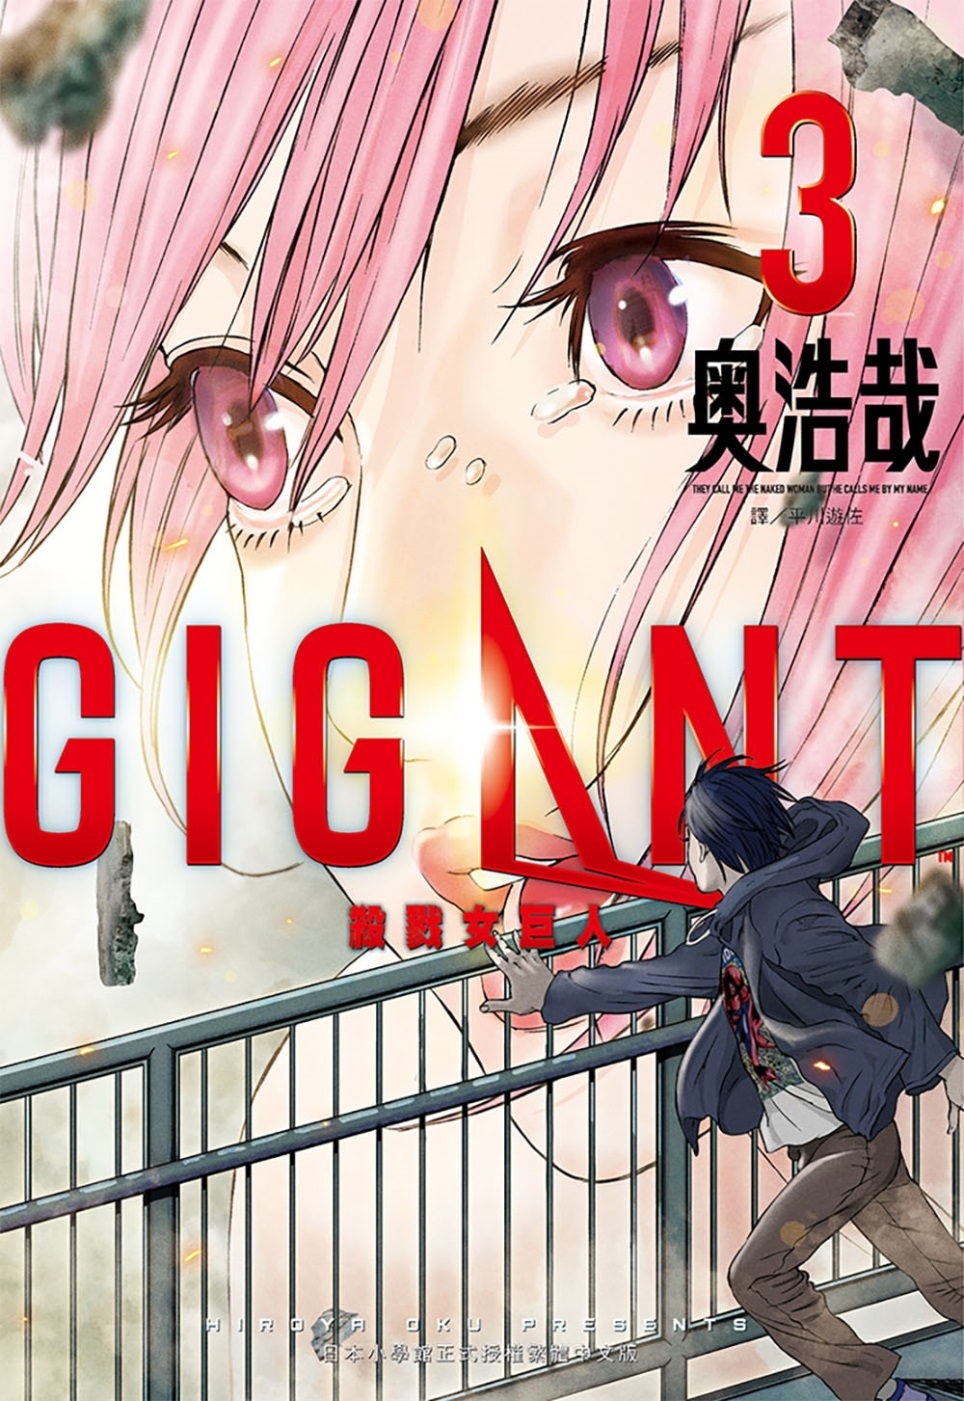 GIGANT 殺戮女巨人(03)(限台灣)